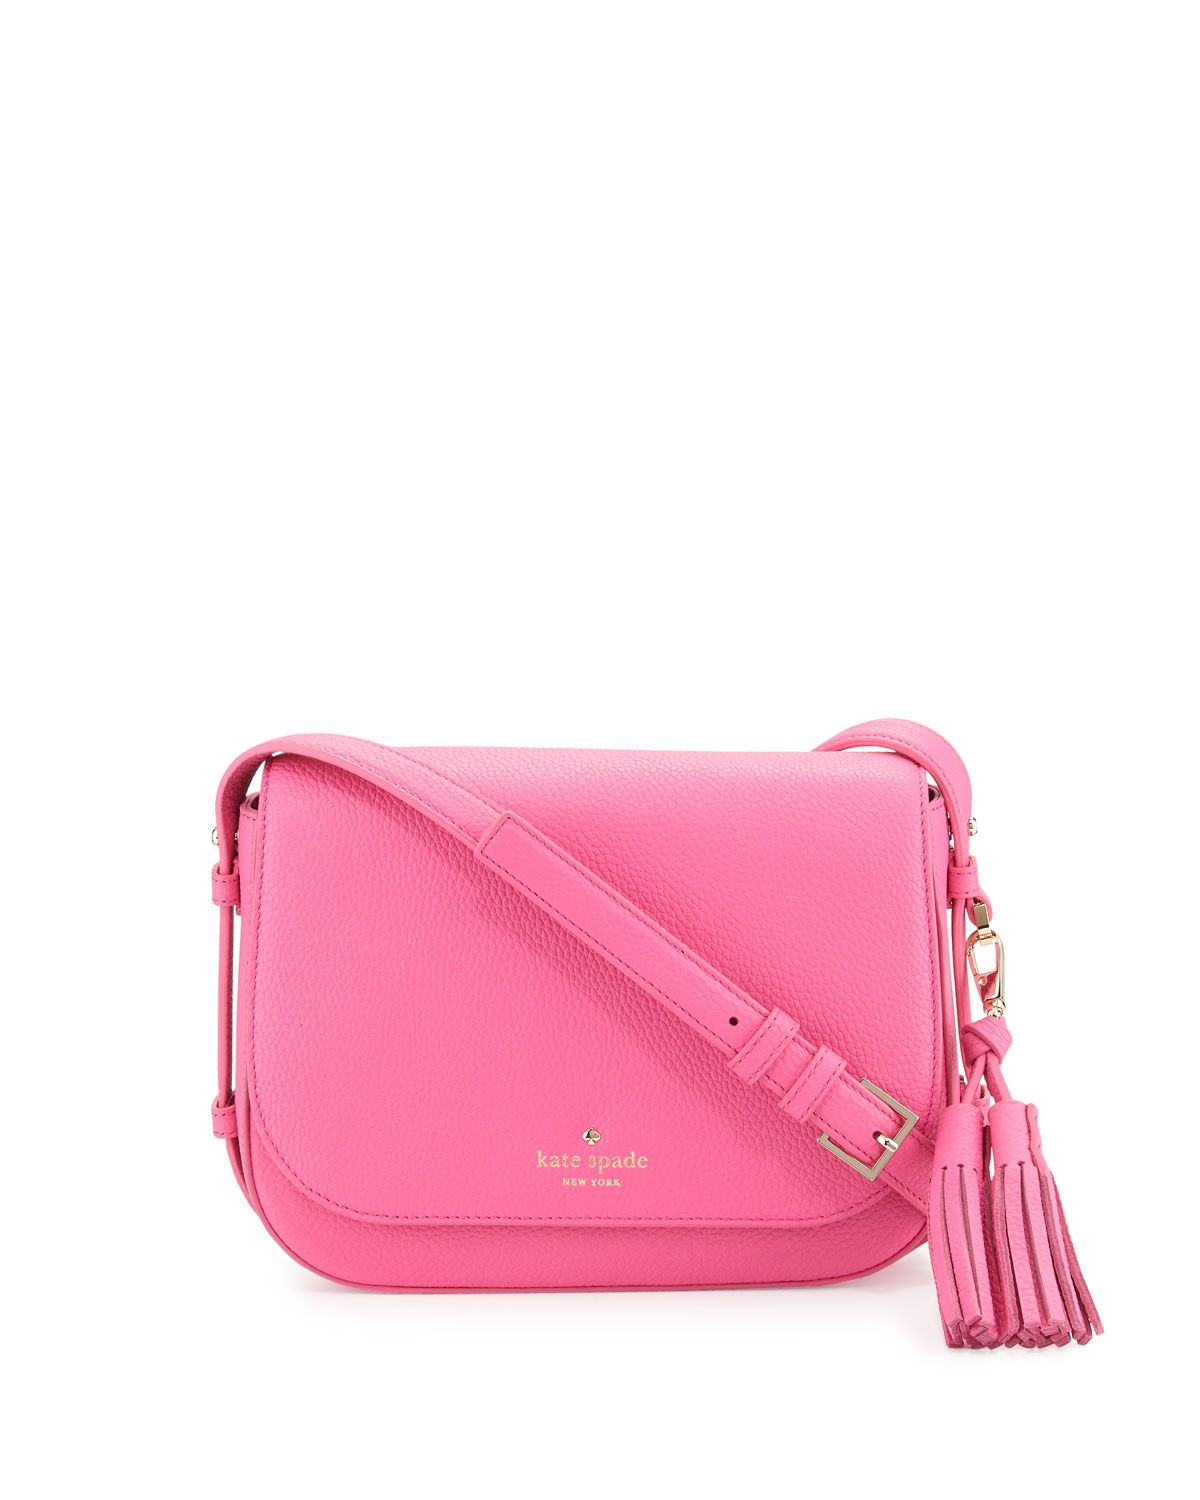 Lyst - Kate spade new york Orchard Street Penelope Crossbody Bag in Pink